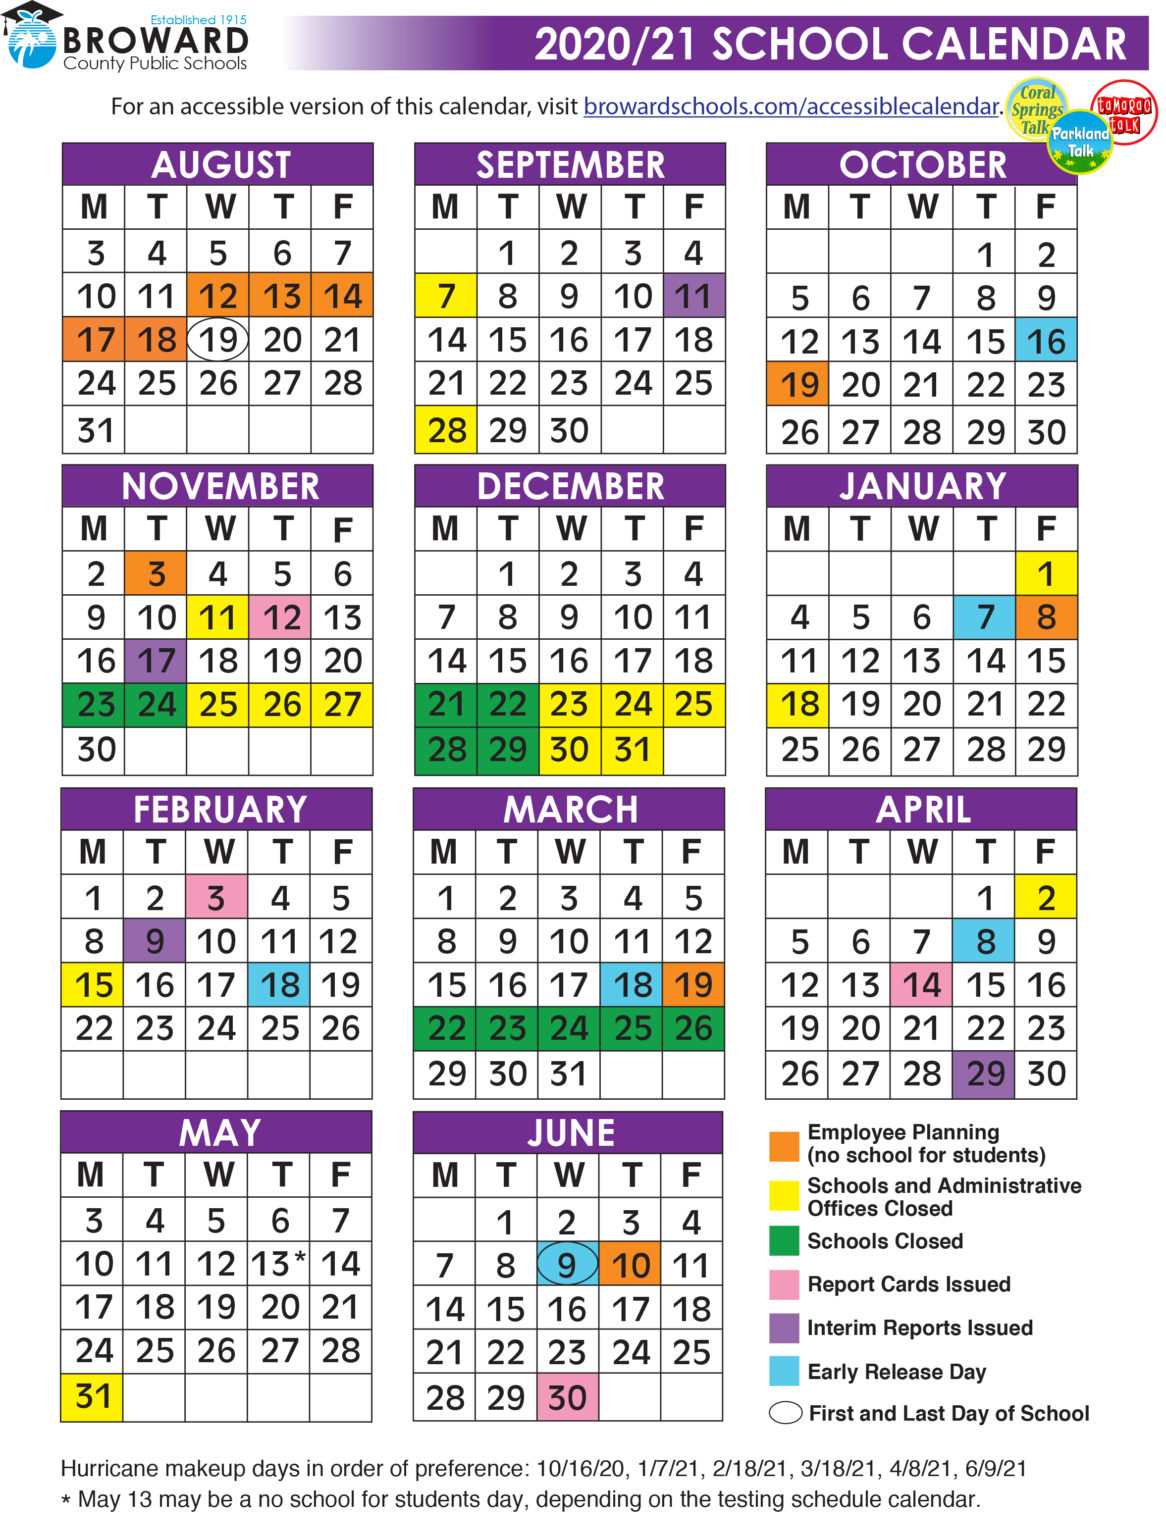 official-2020-21-broward-county-public-schools-color-calendar-parkland-talk